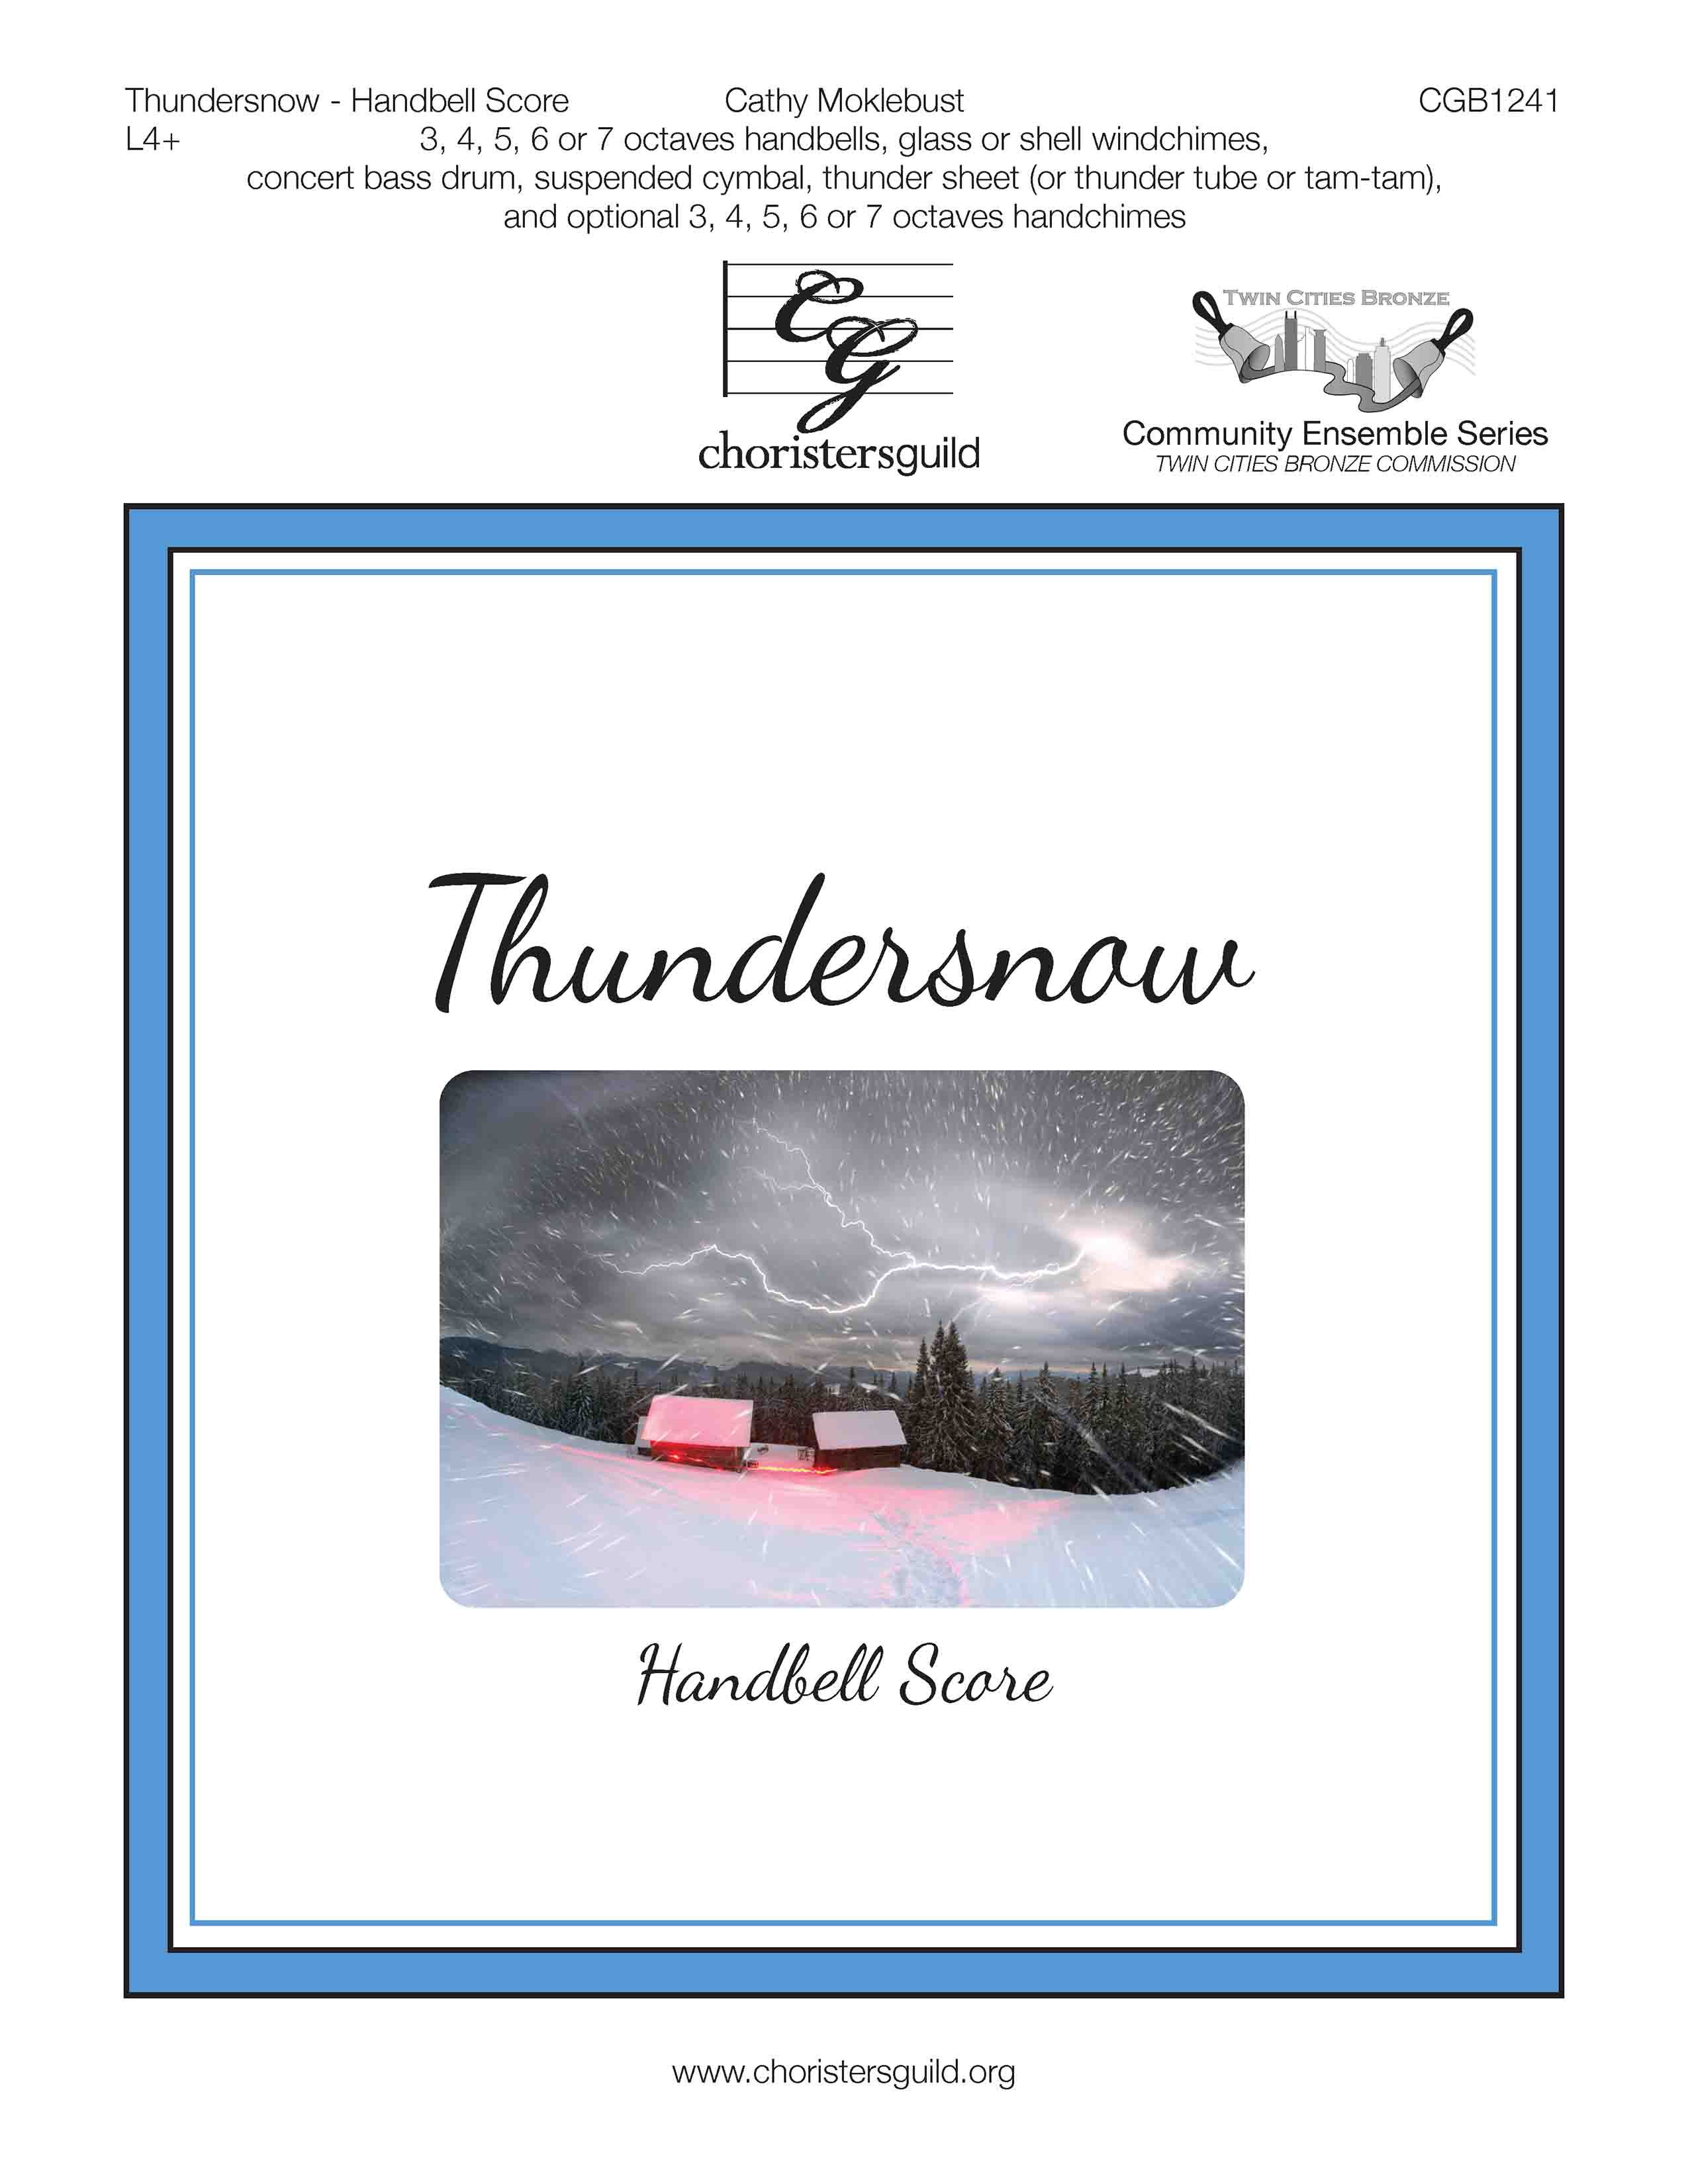 Thundersnow (Handbell Score)